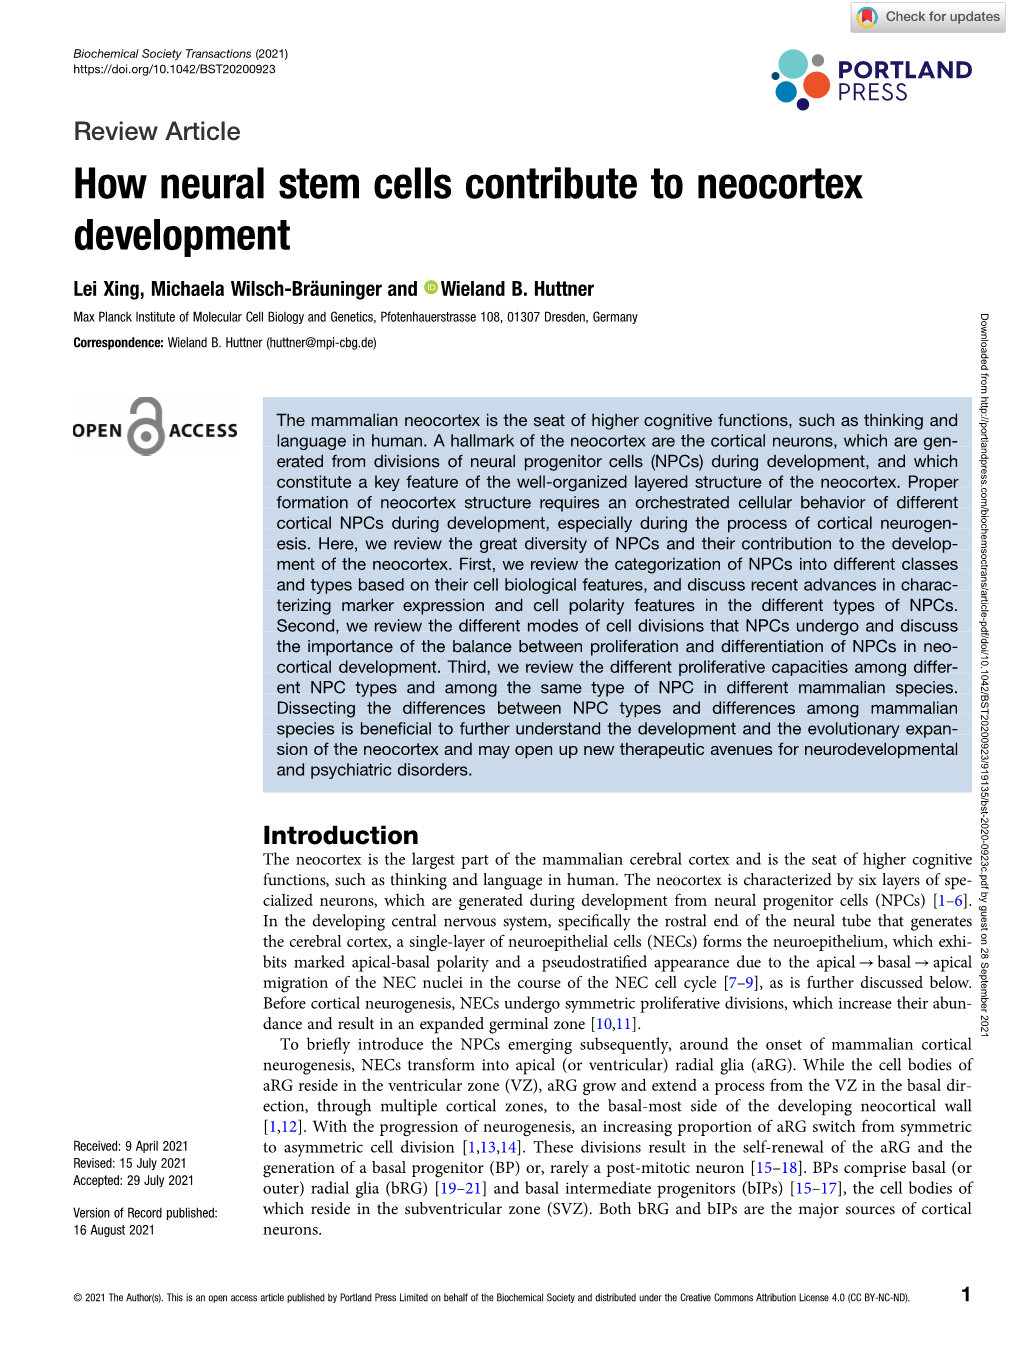 How Neural Stem Cells Contribute to Neocortex Development